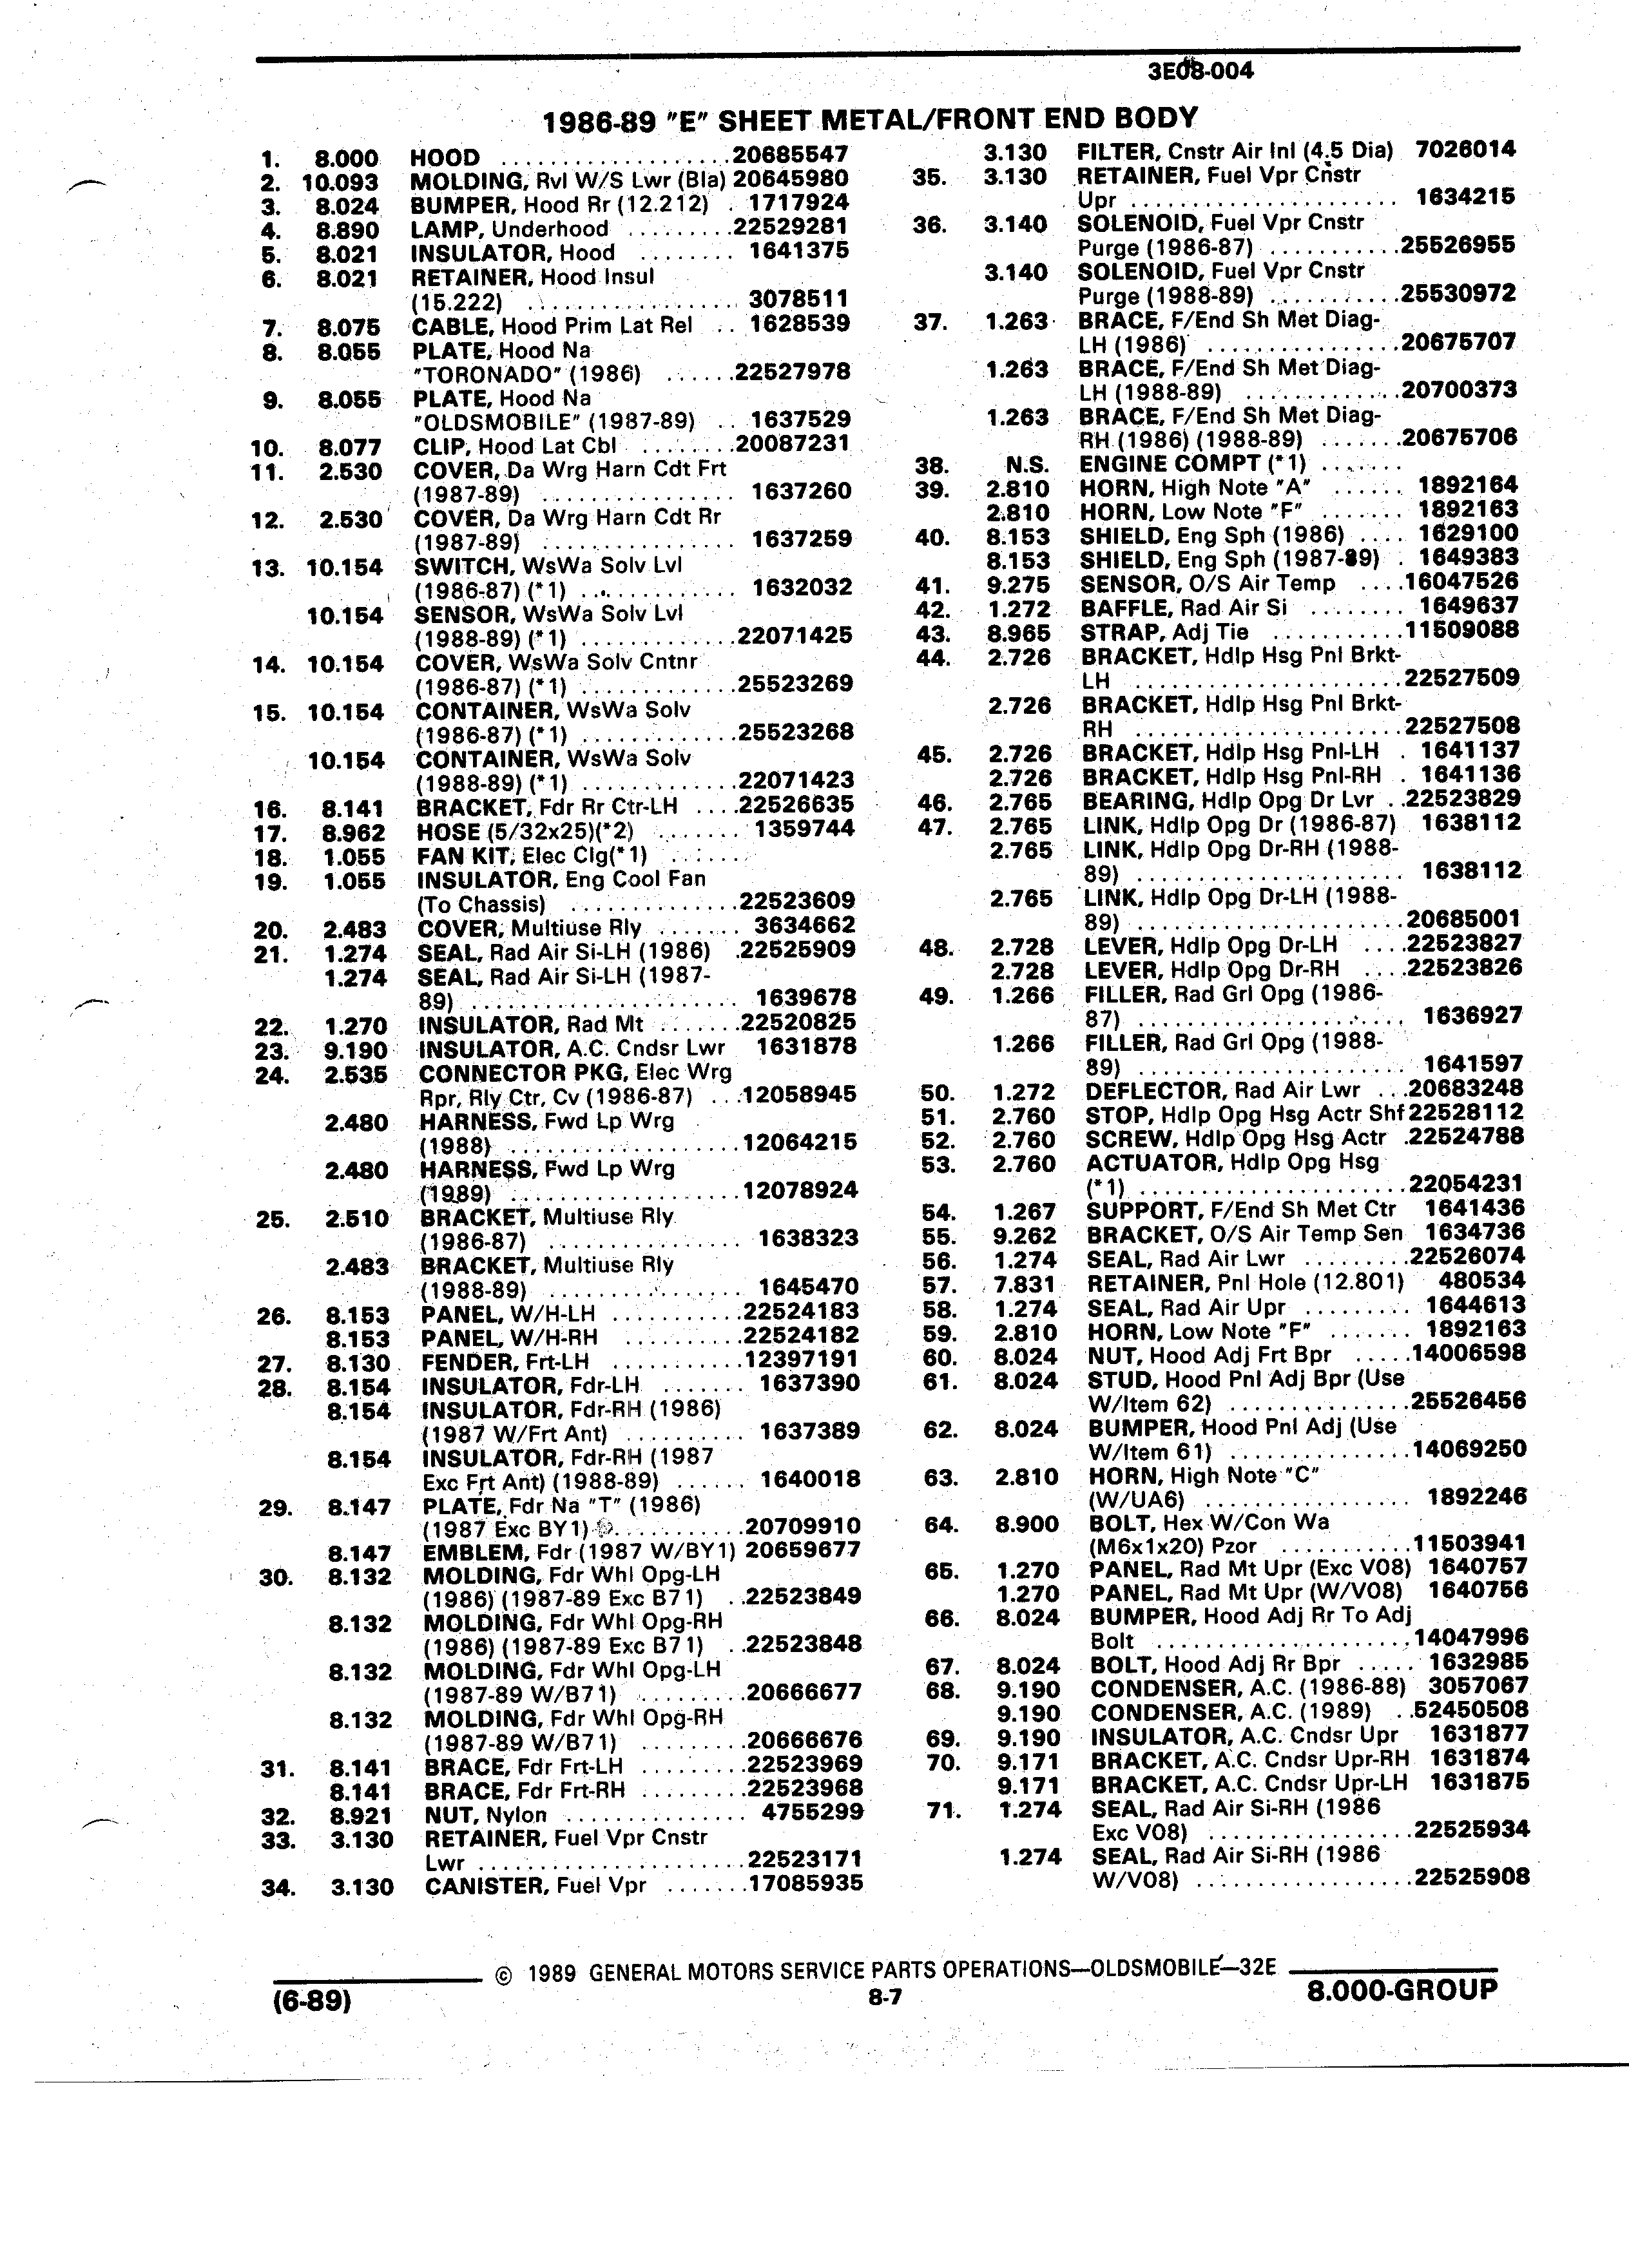 Parts and Illustration Catalog 32E June 1989